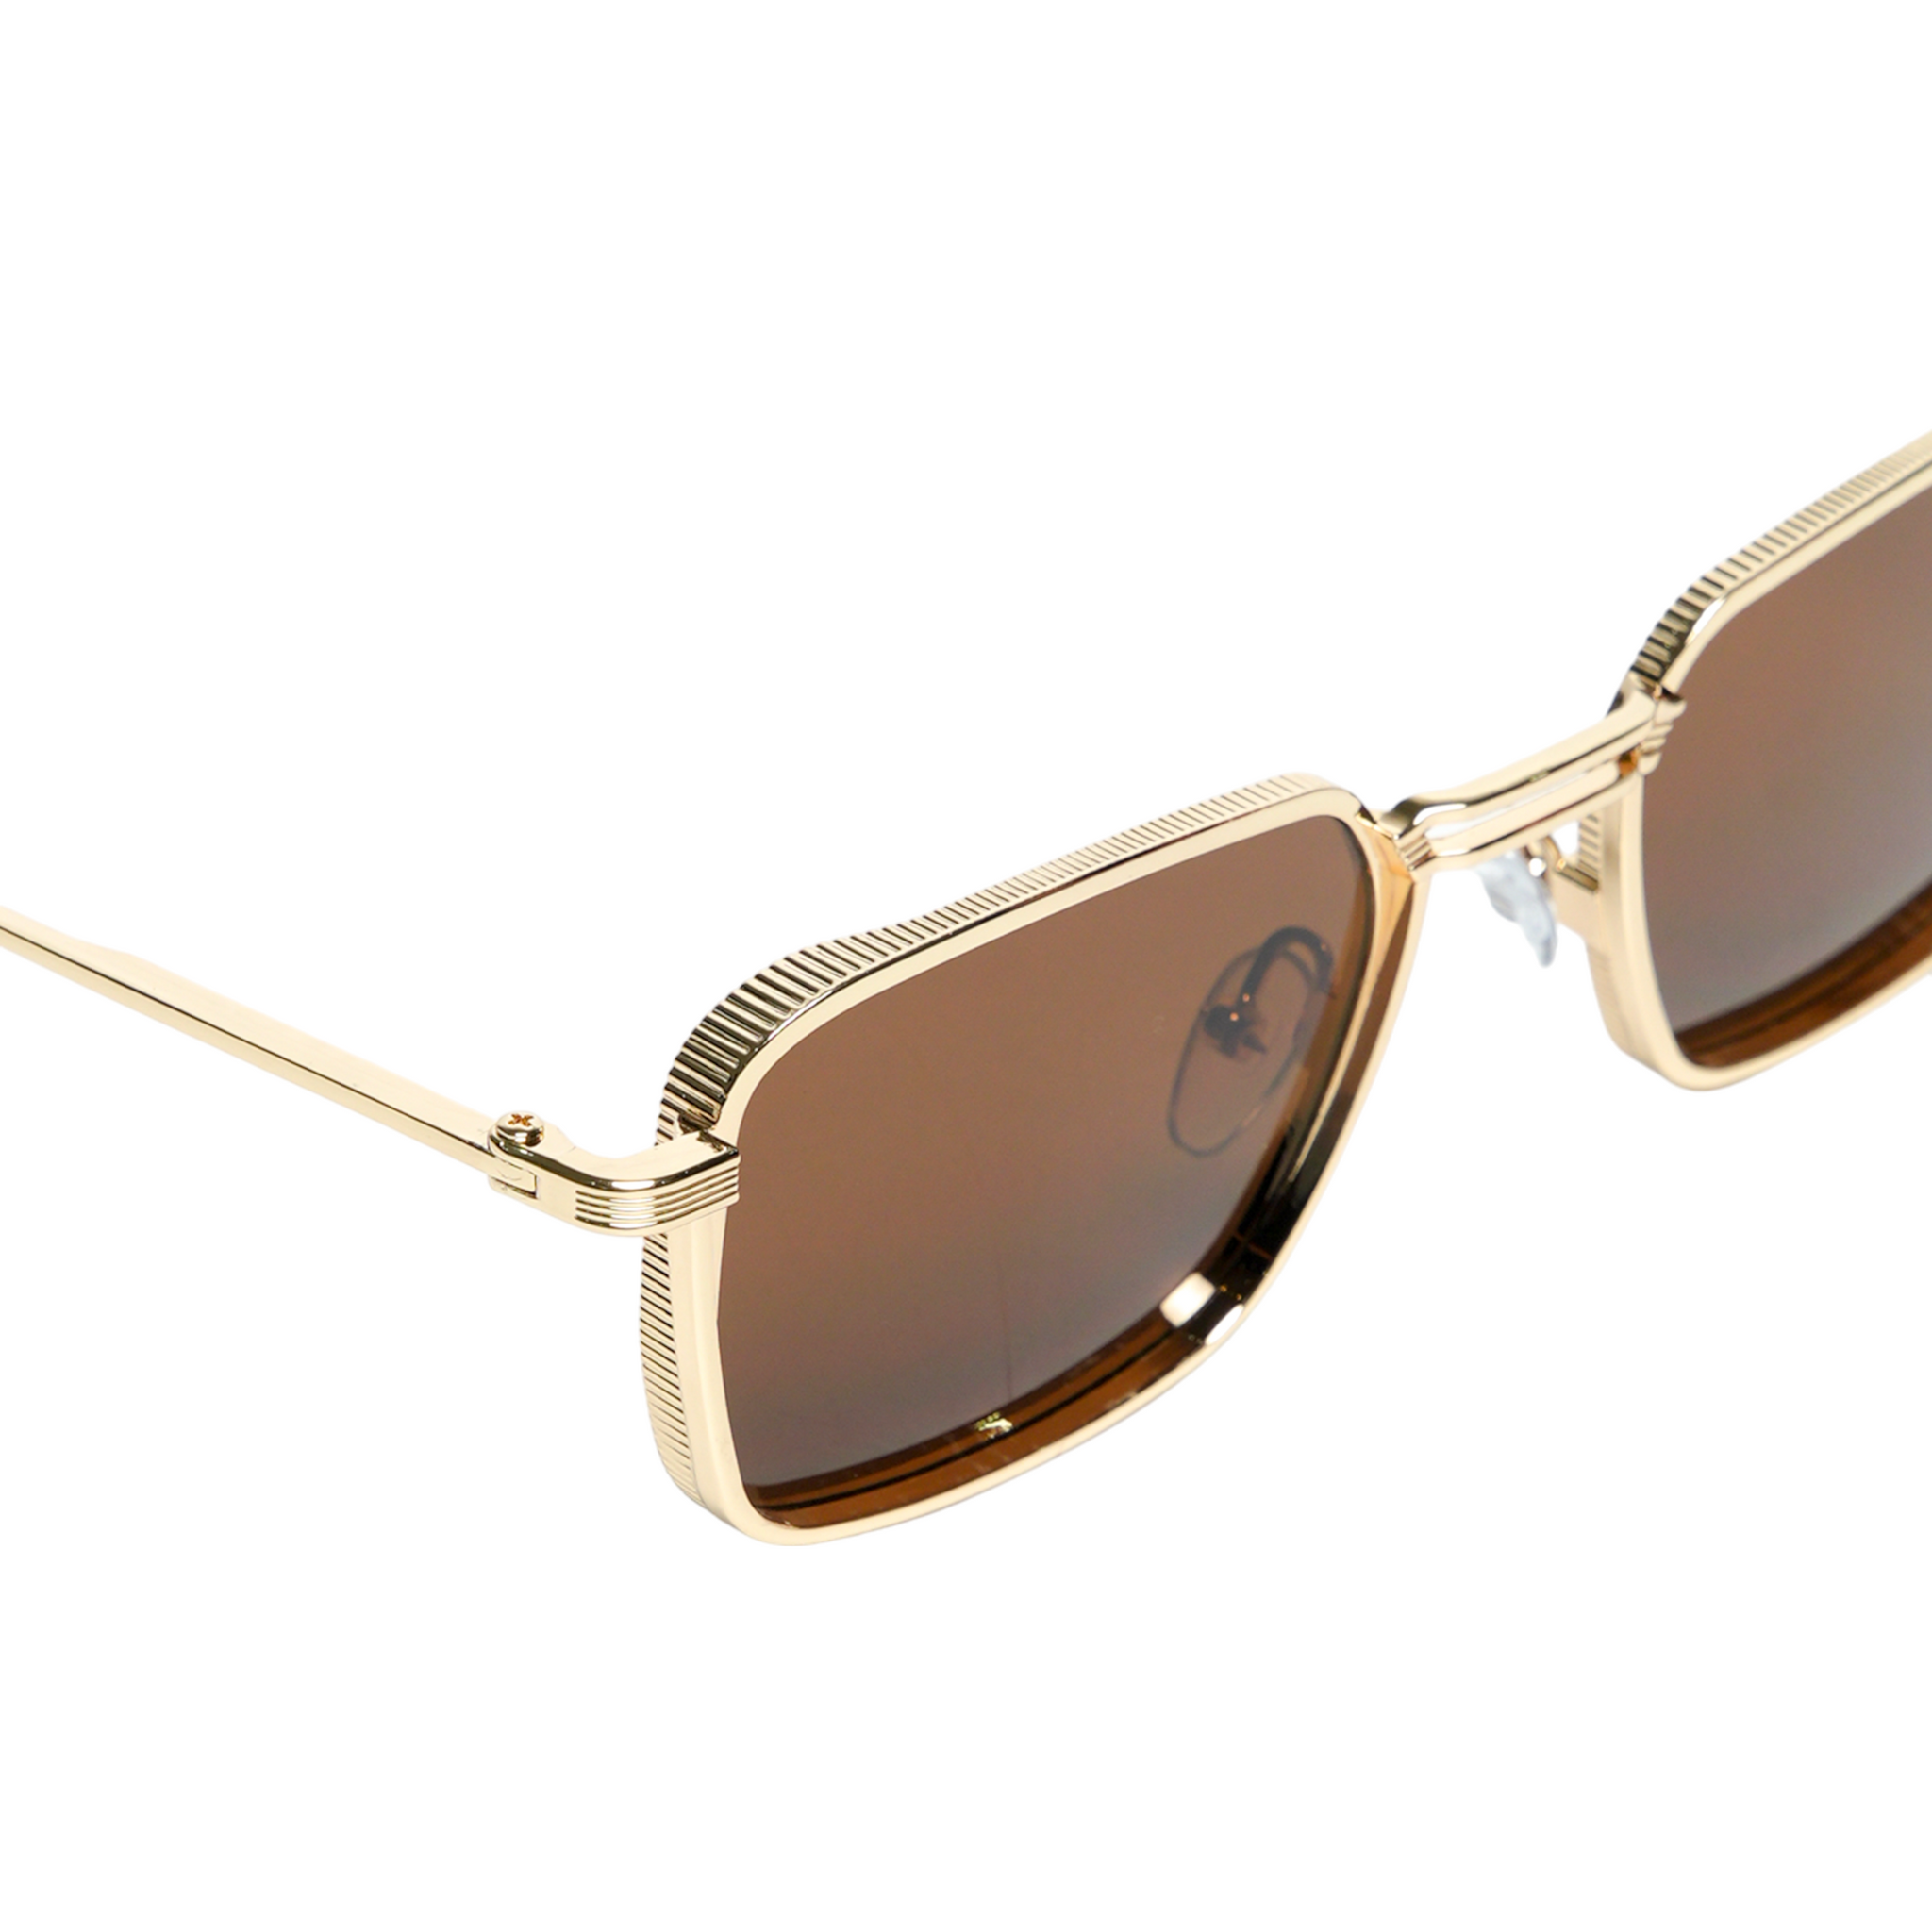 Chokore Double Beam Designer Metal Sunglasses (Brown)